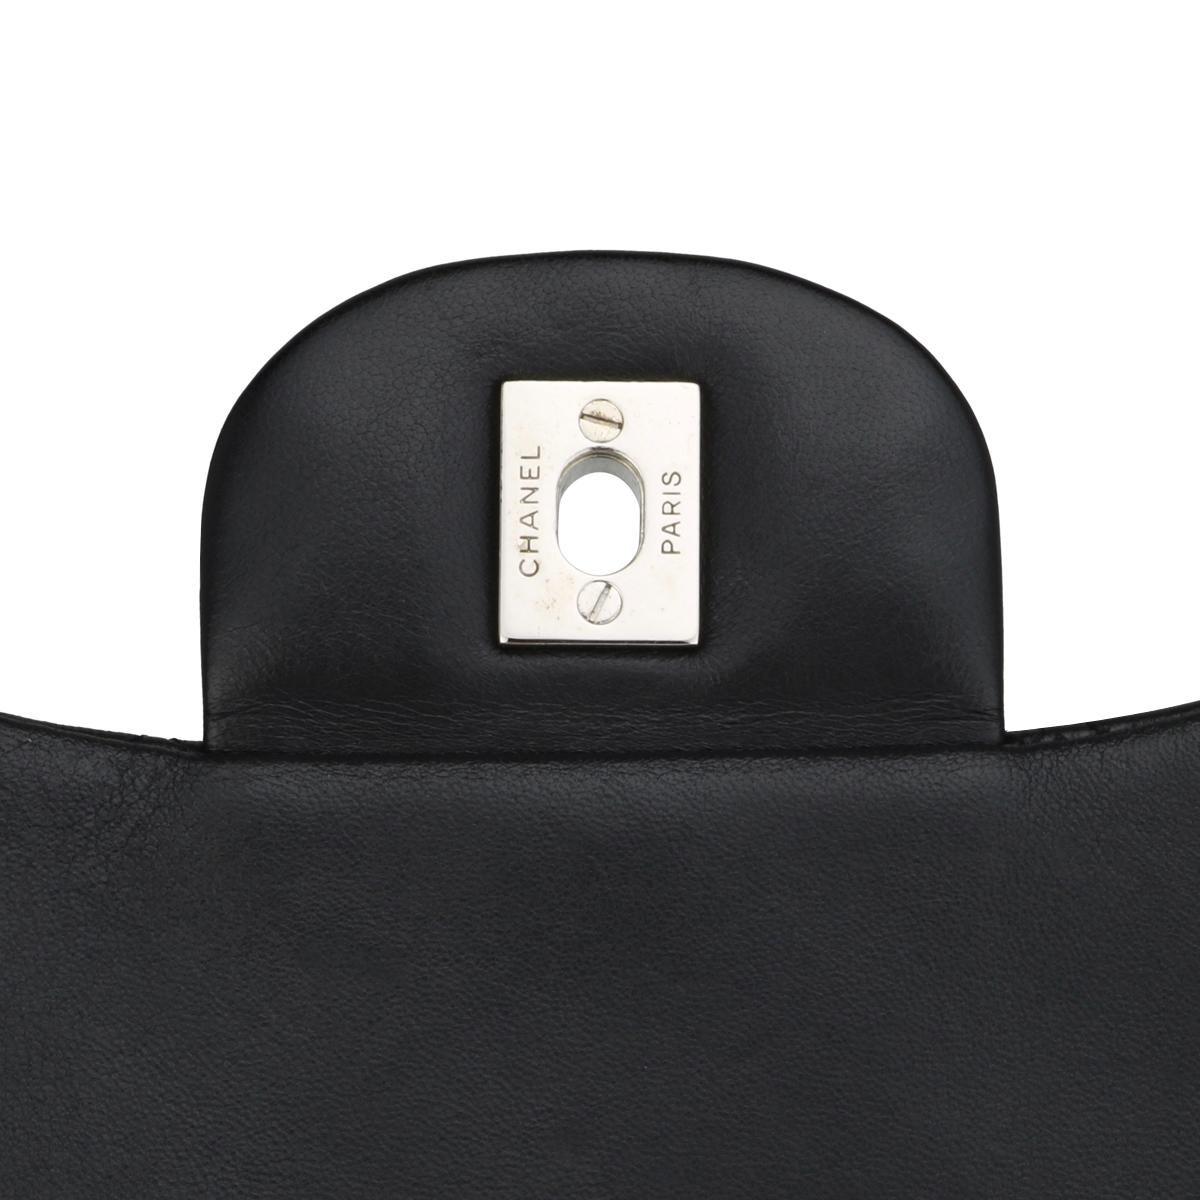 CHANEL Single Flap Jumbo Bag in Black Lambskin with Silver-Tone Hardware 2010 For Sale 10